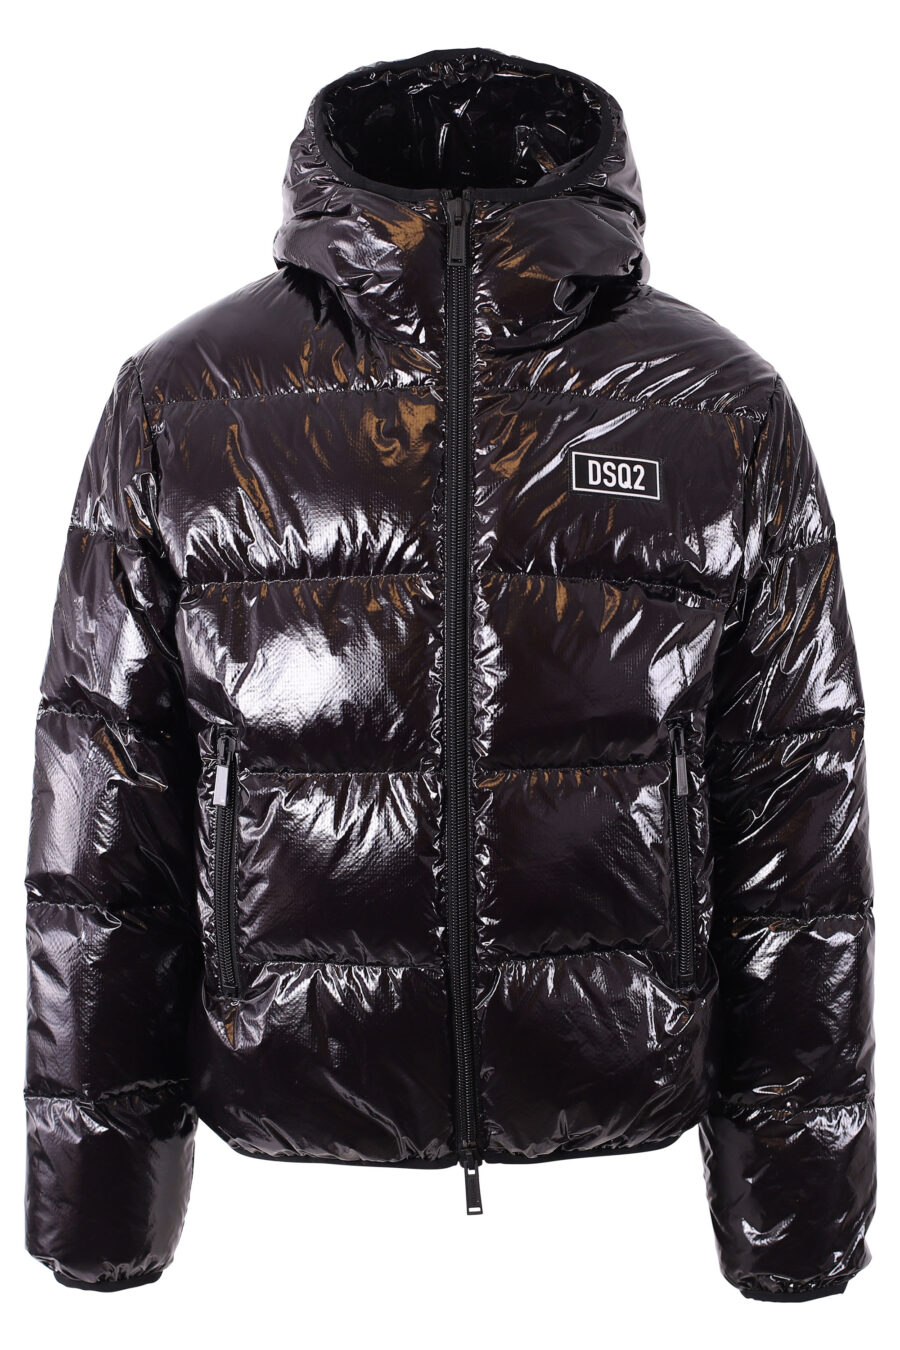 Black shiny jacket with minilogue - IMG 1092